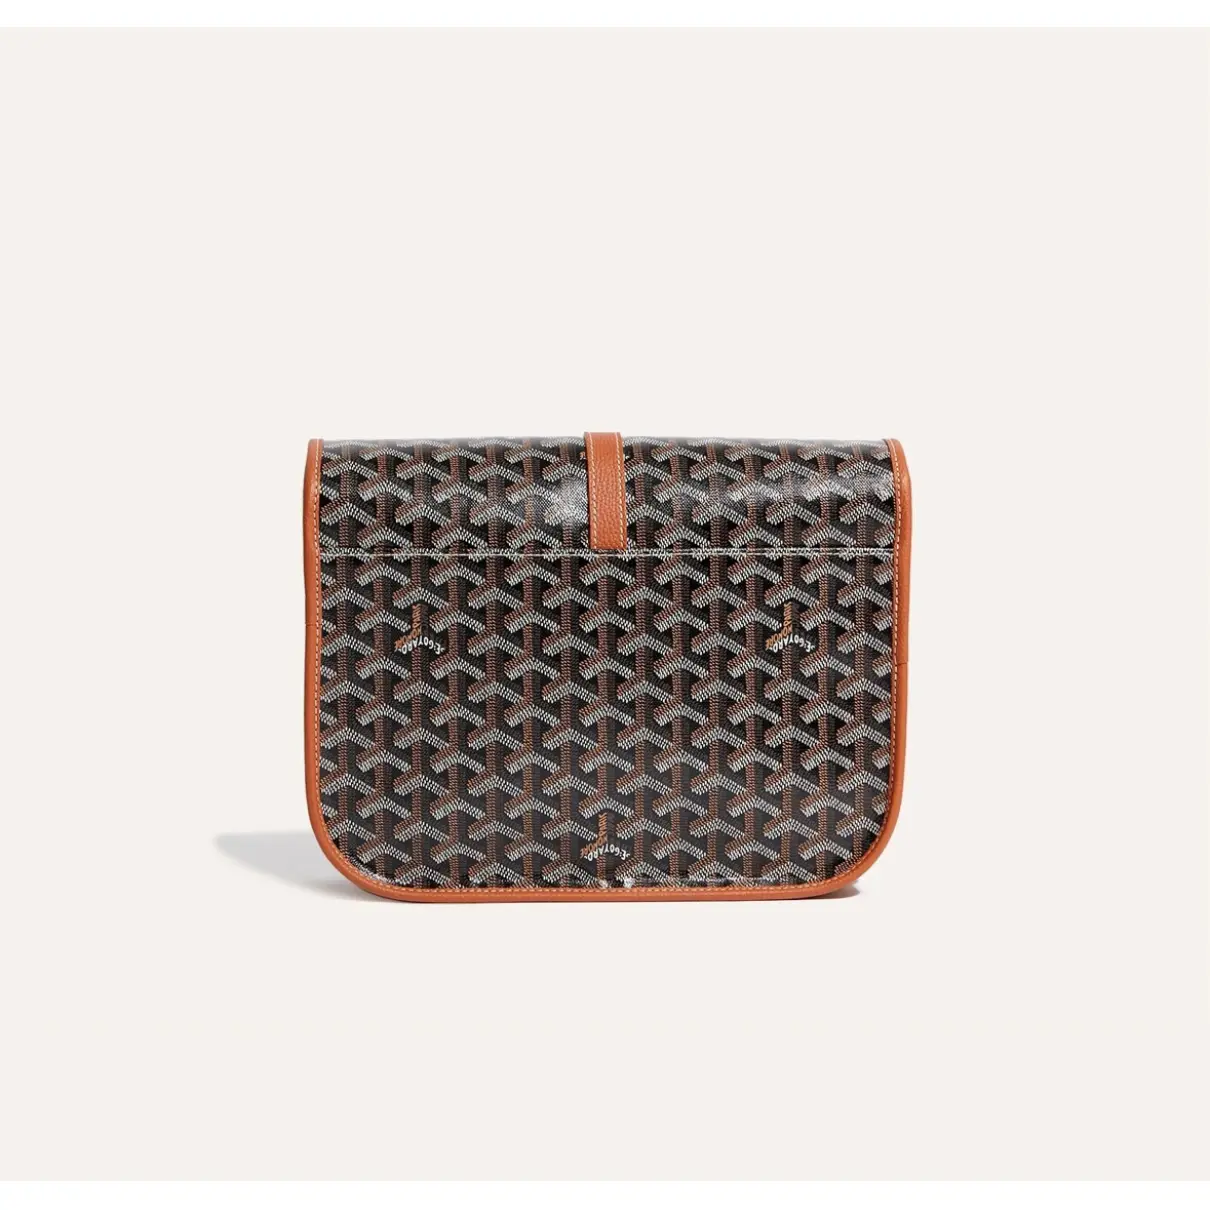 Buy Goyard Belvedère cloth handbag online